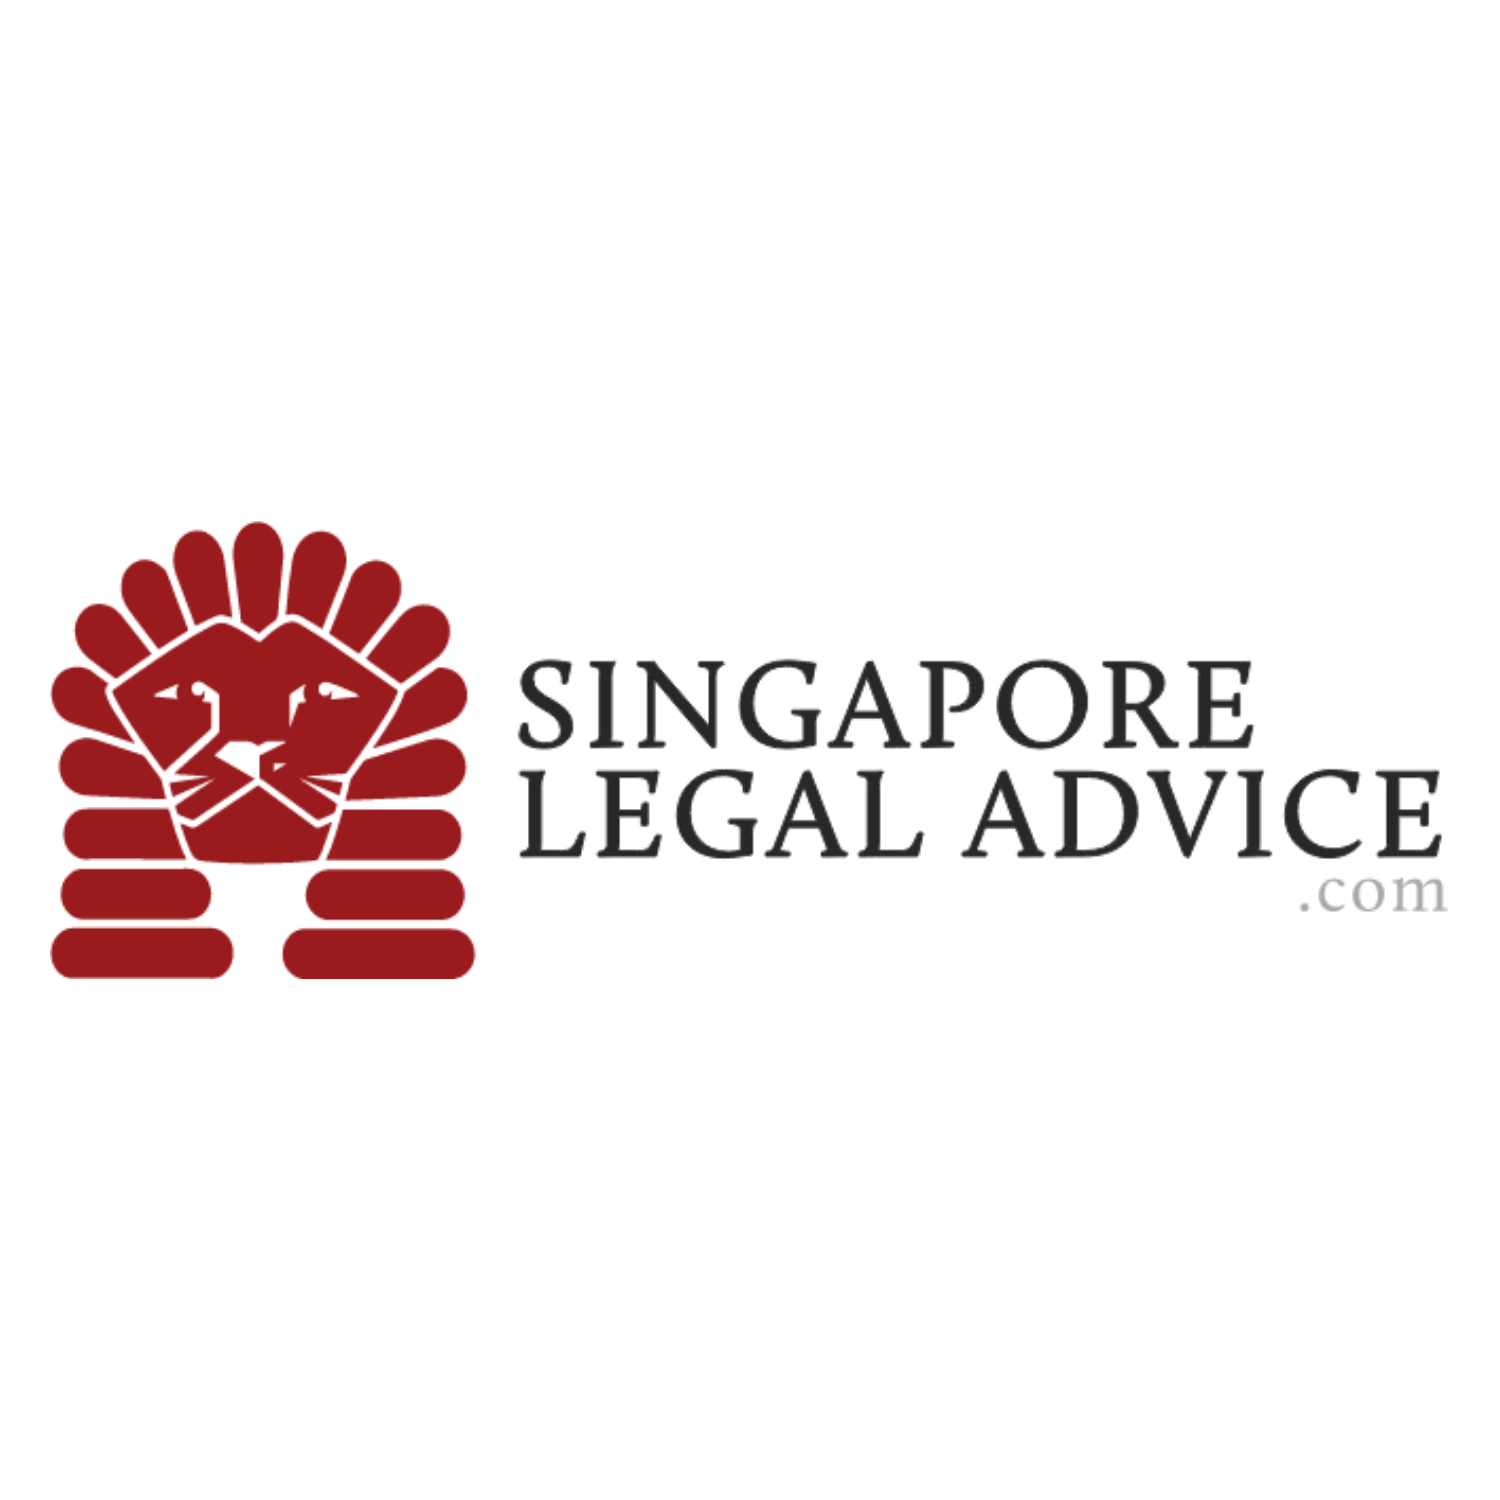 Singapore Legal Advice Logo